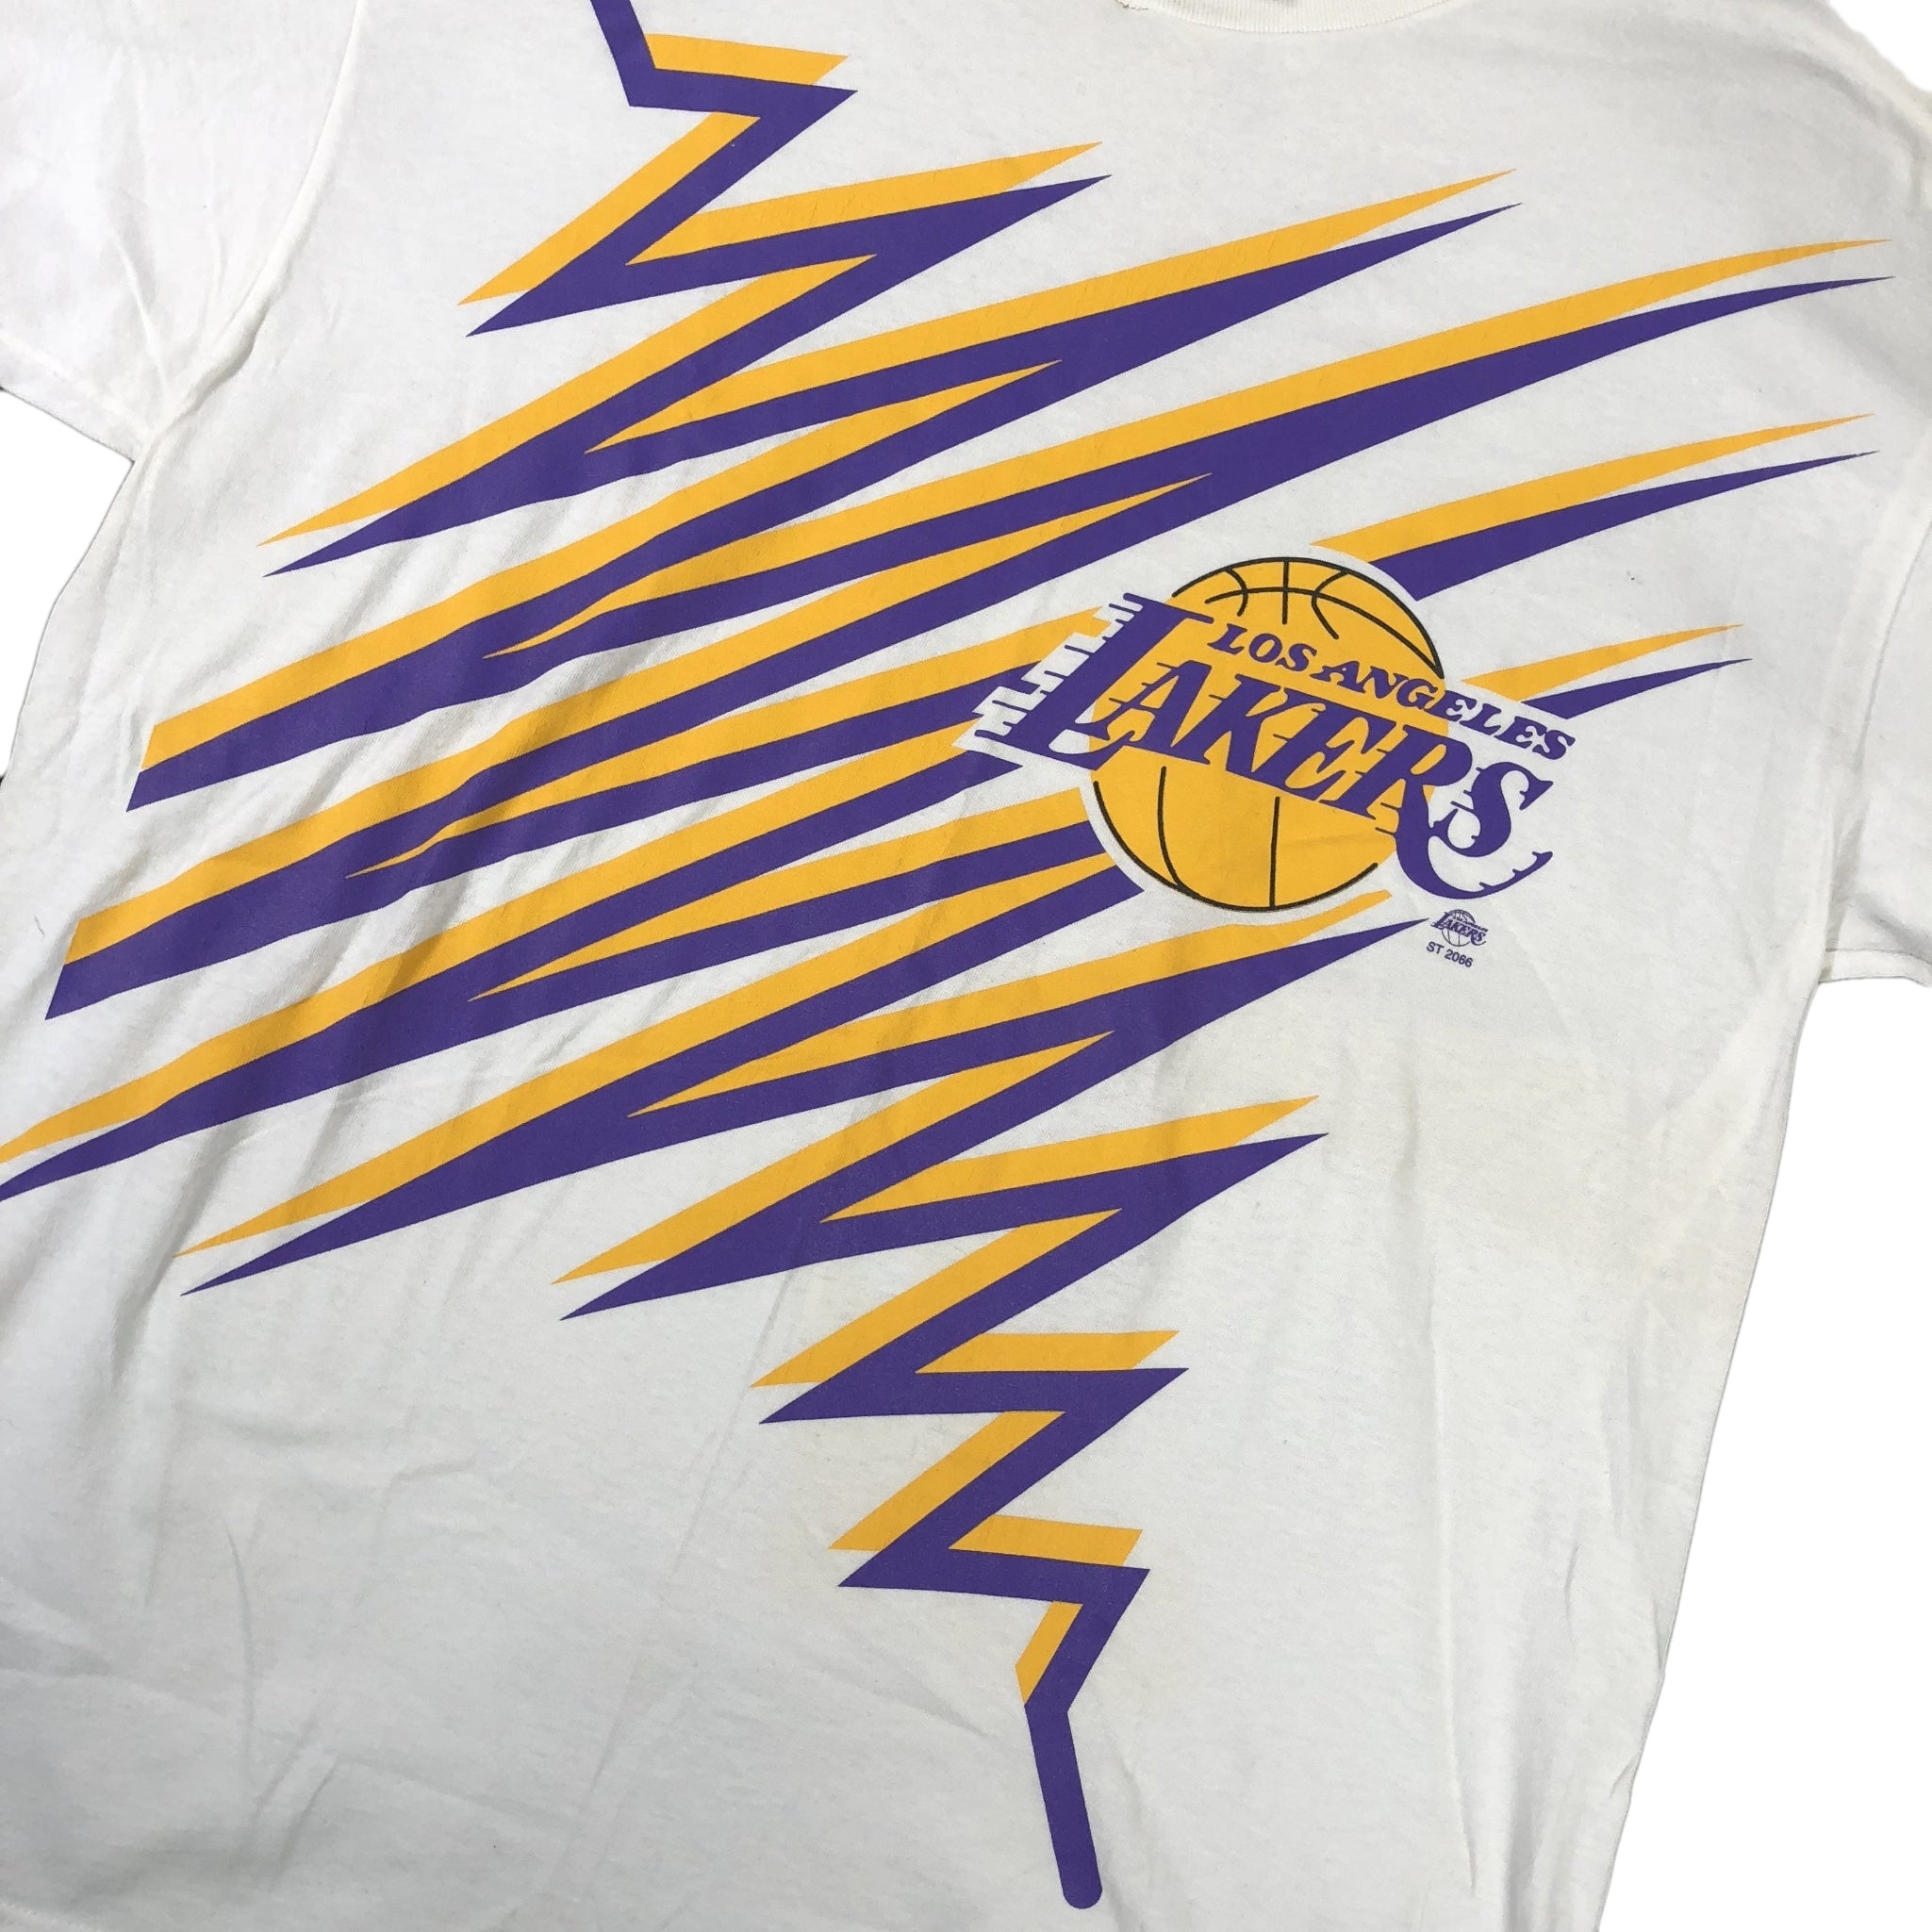 Los Angeles Lakers Collection. LA Lakers Jerseys, T-shirts, Shorts